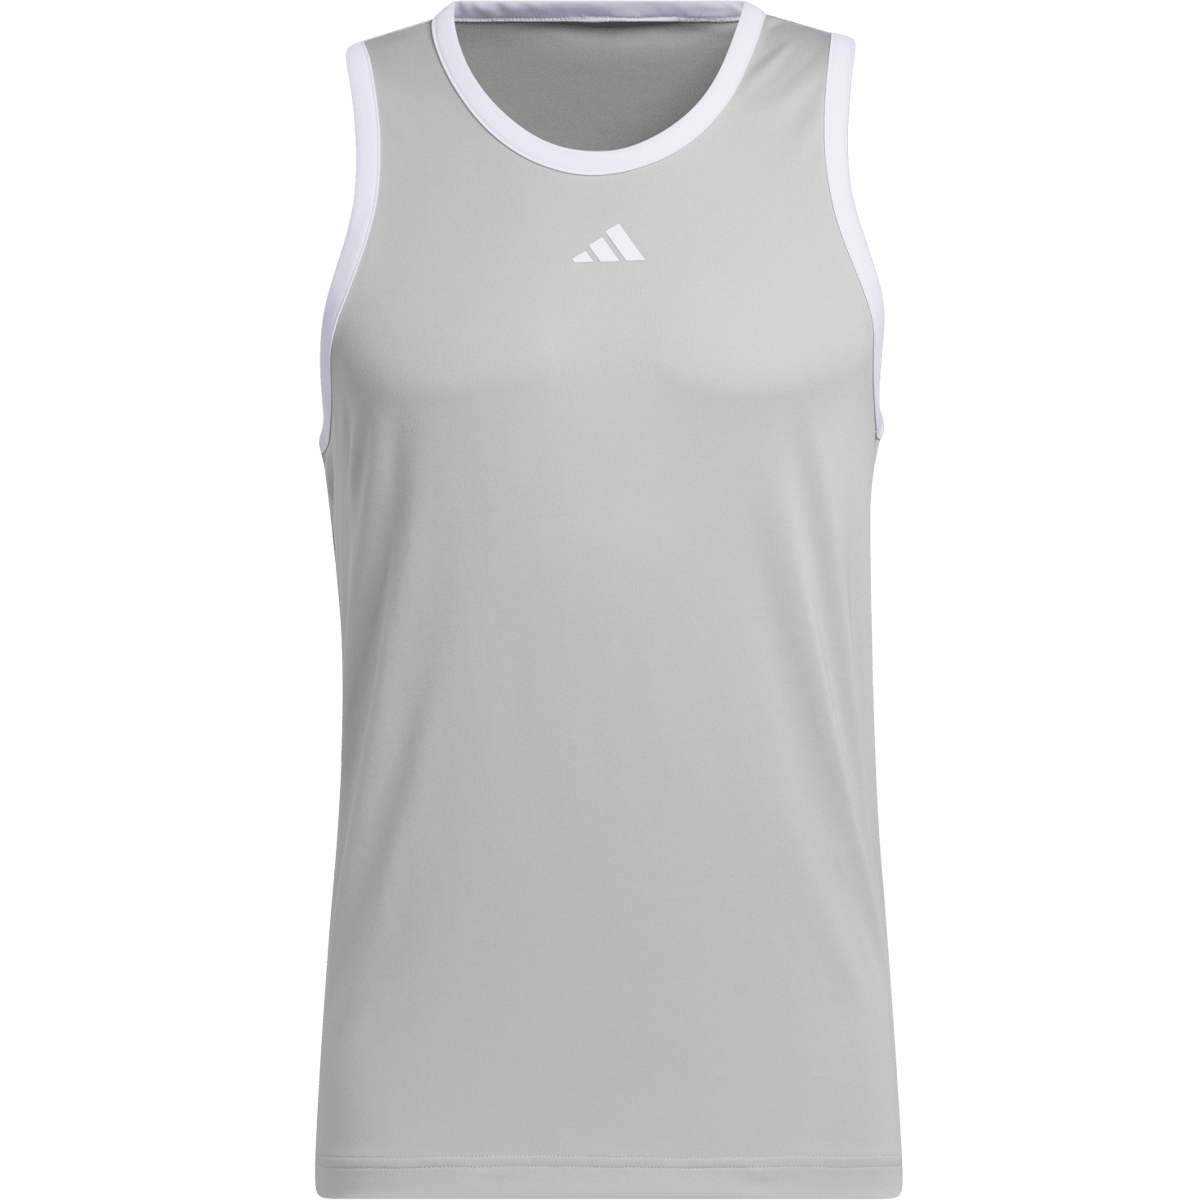 Sleeveless/Tank compression & baselayer shirts. Nike UK